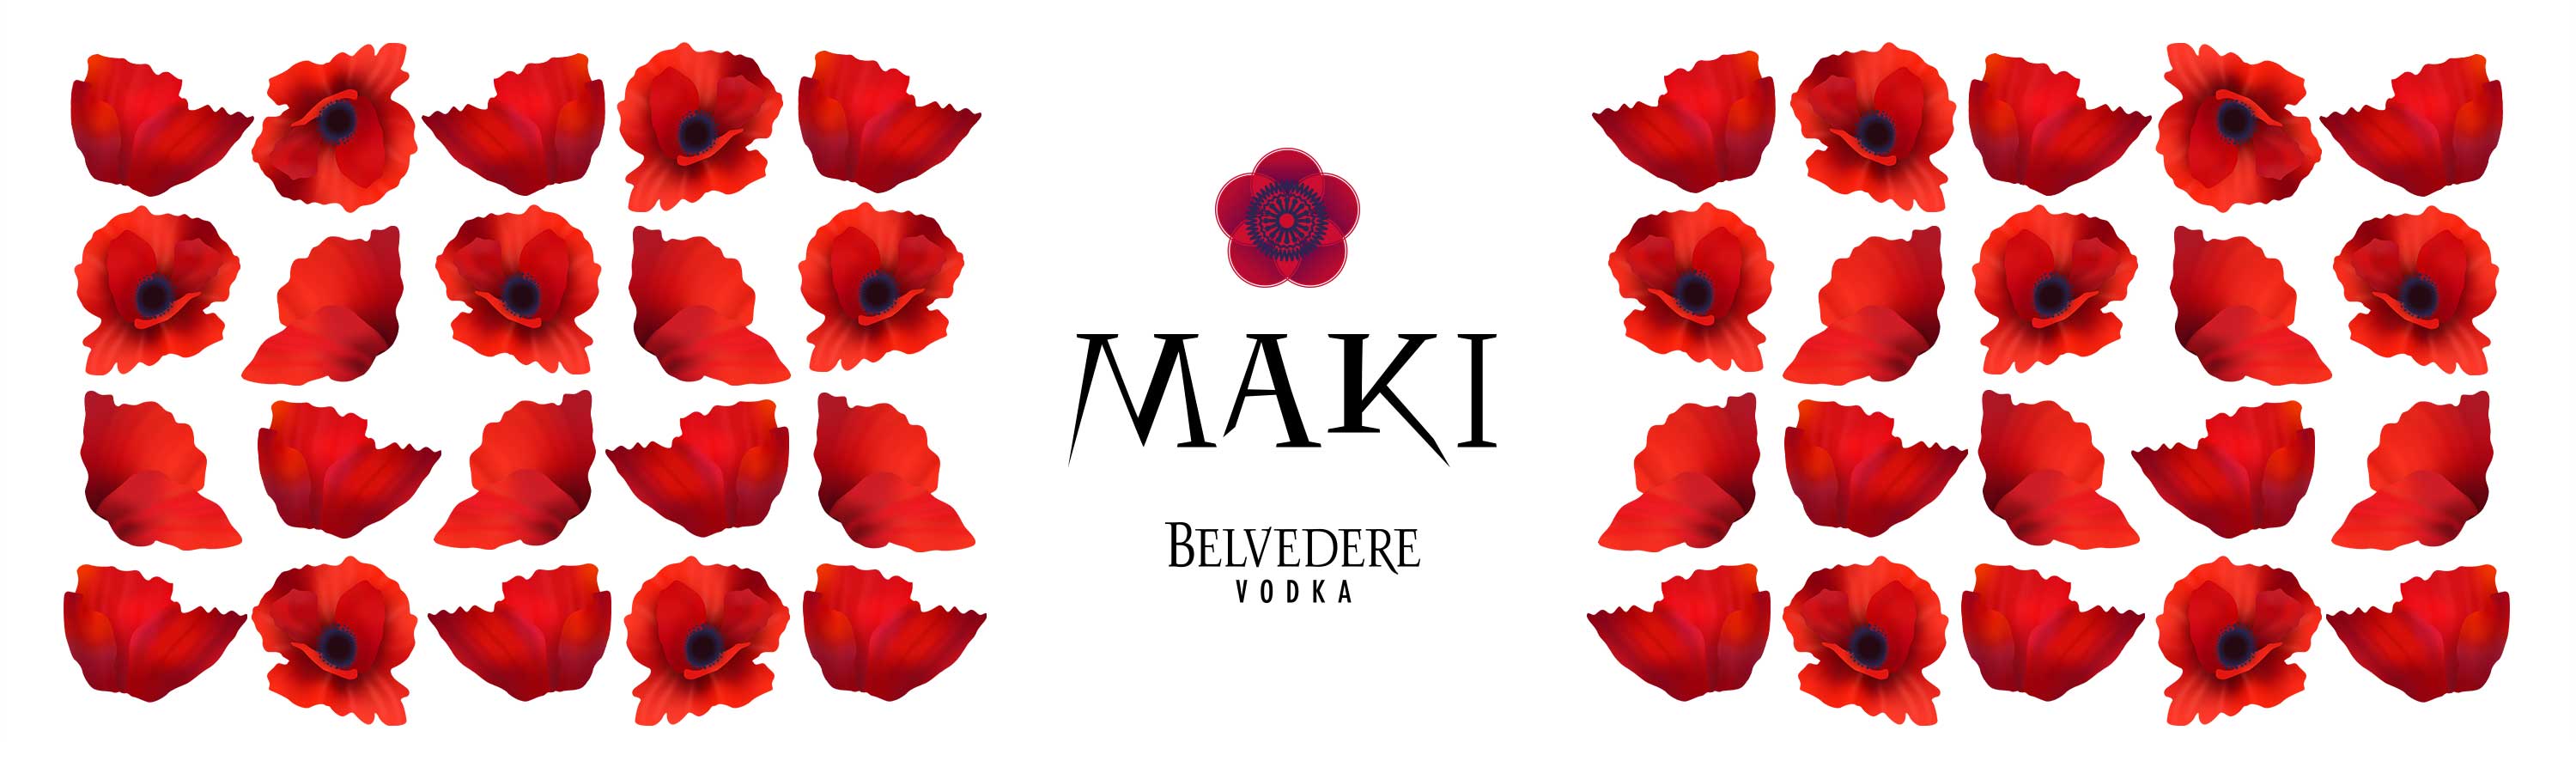 Belvedere_vodka_logo_v1